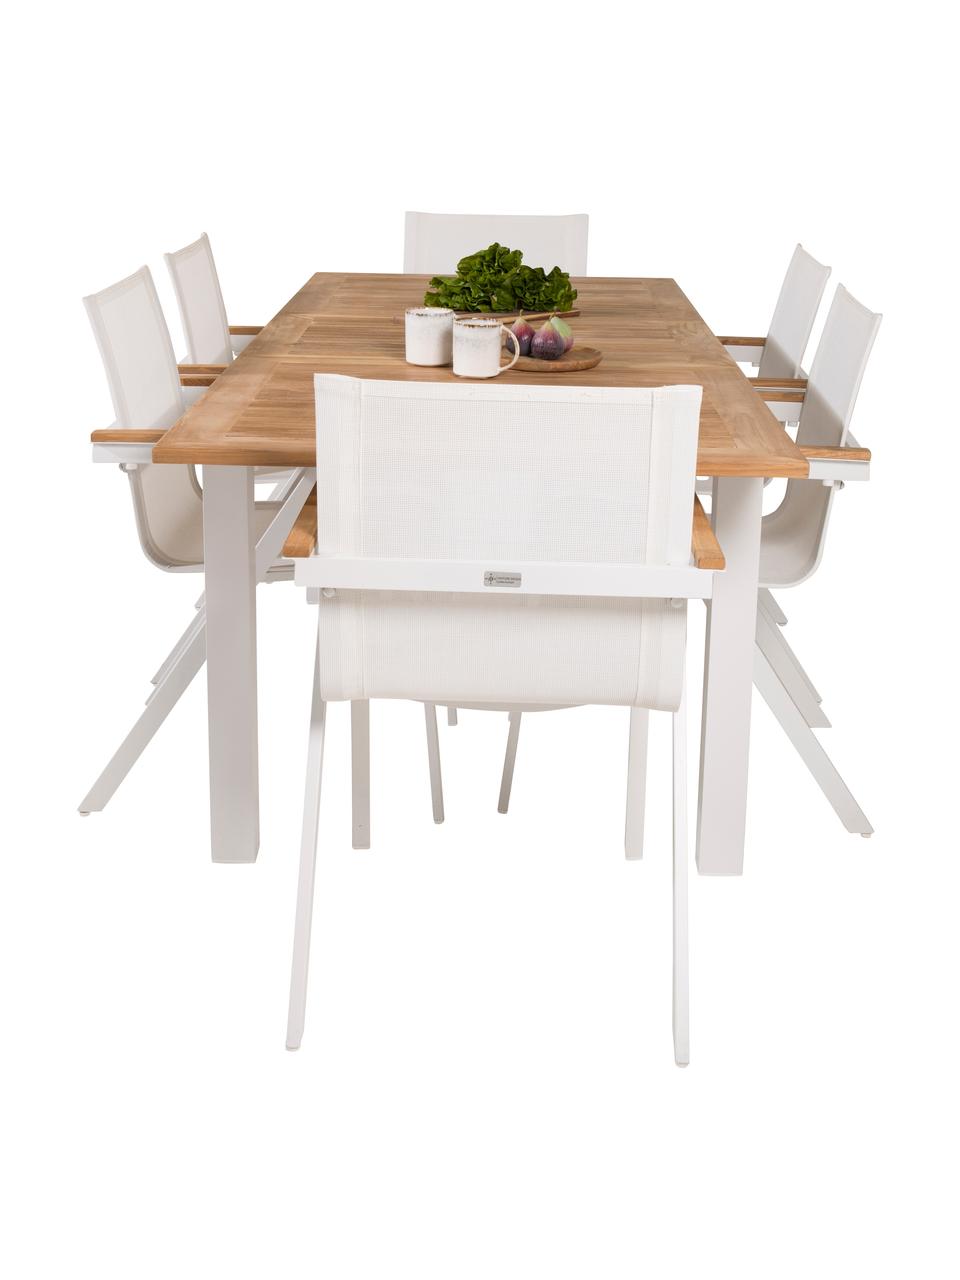 Set tavolo e sedie da giardino Mexico 7 pz, Seduta: textilene, Bianco, marrone, Set in varie misure